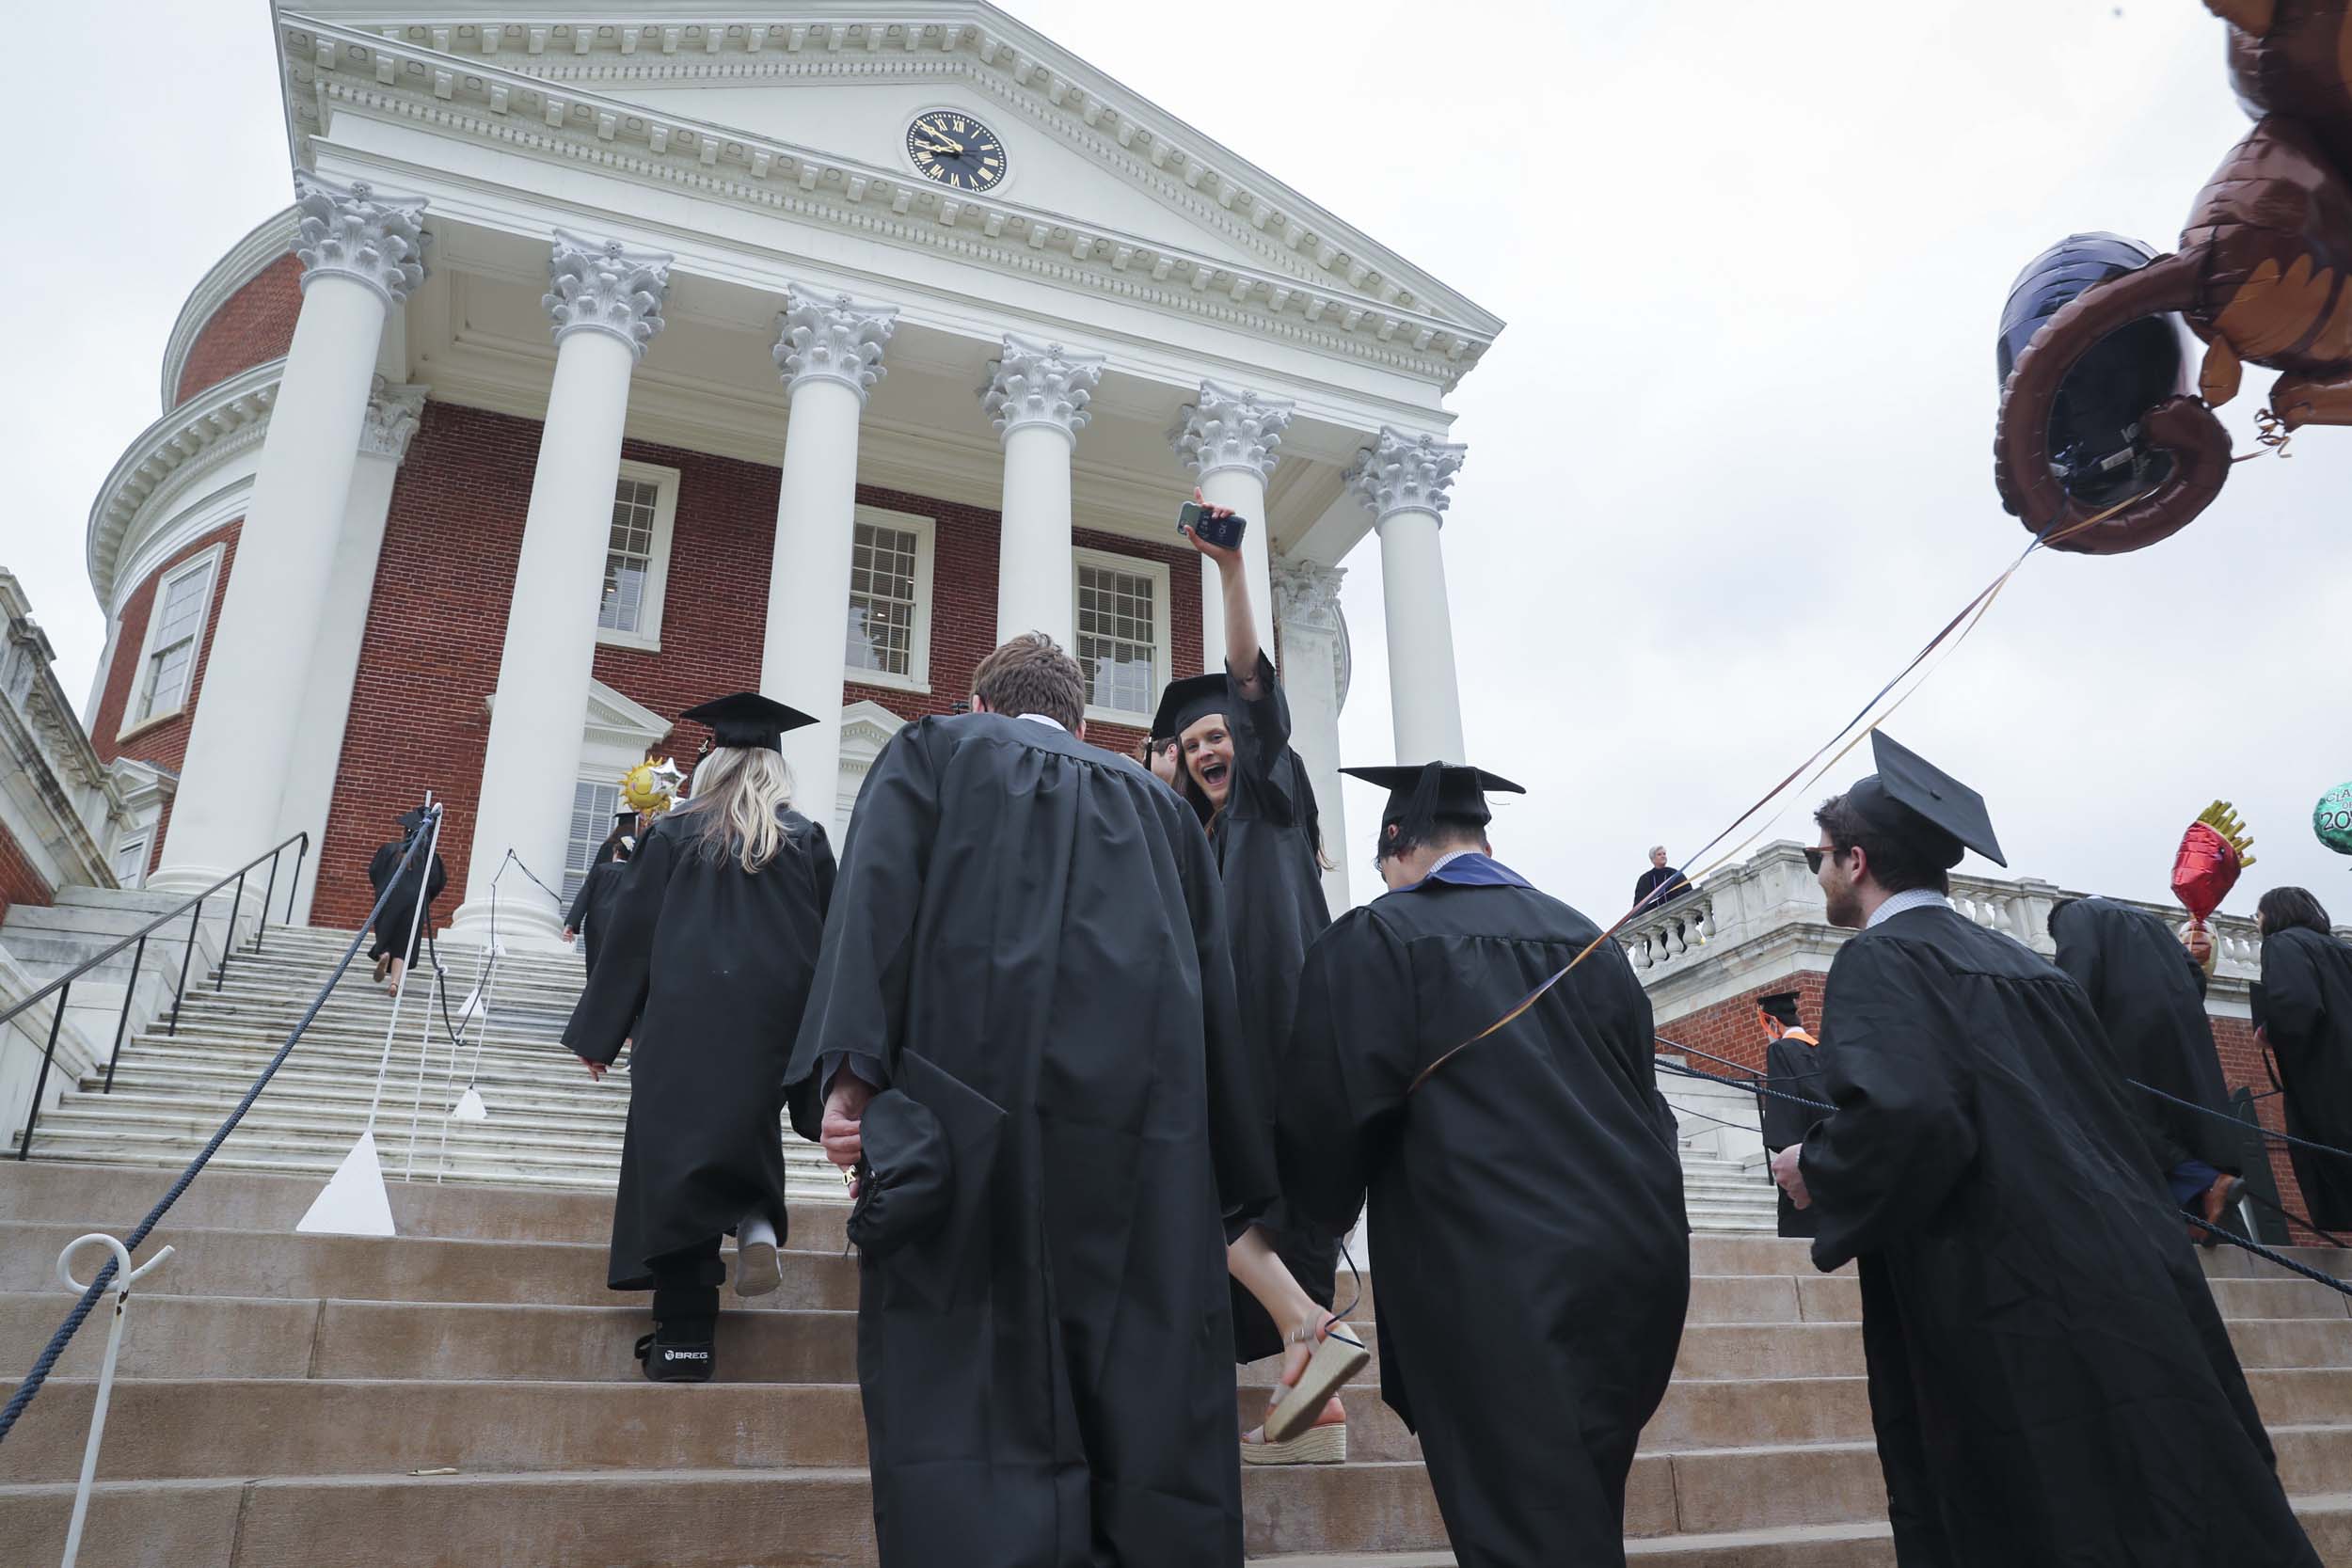 Graduates walking up the steps of the Rotunda